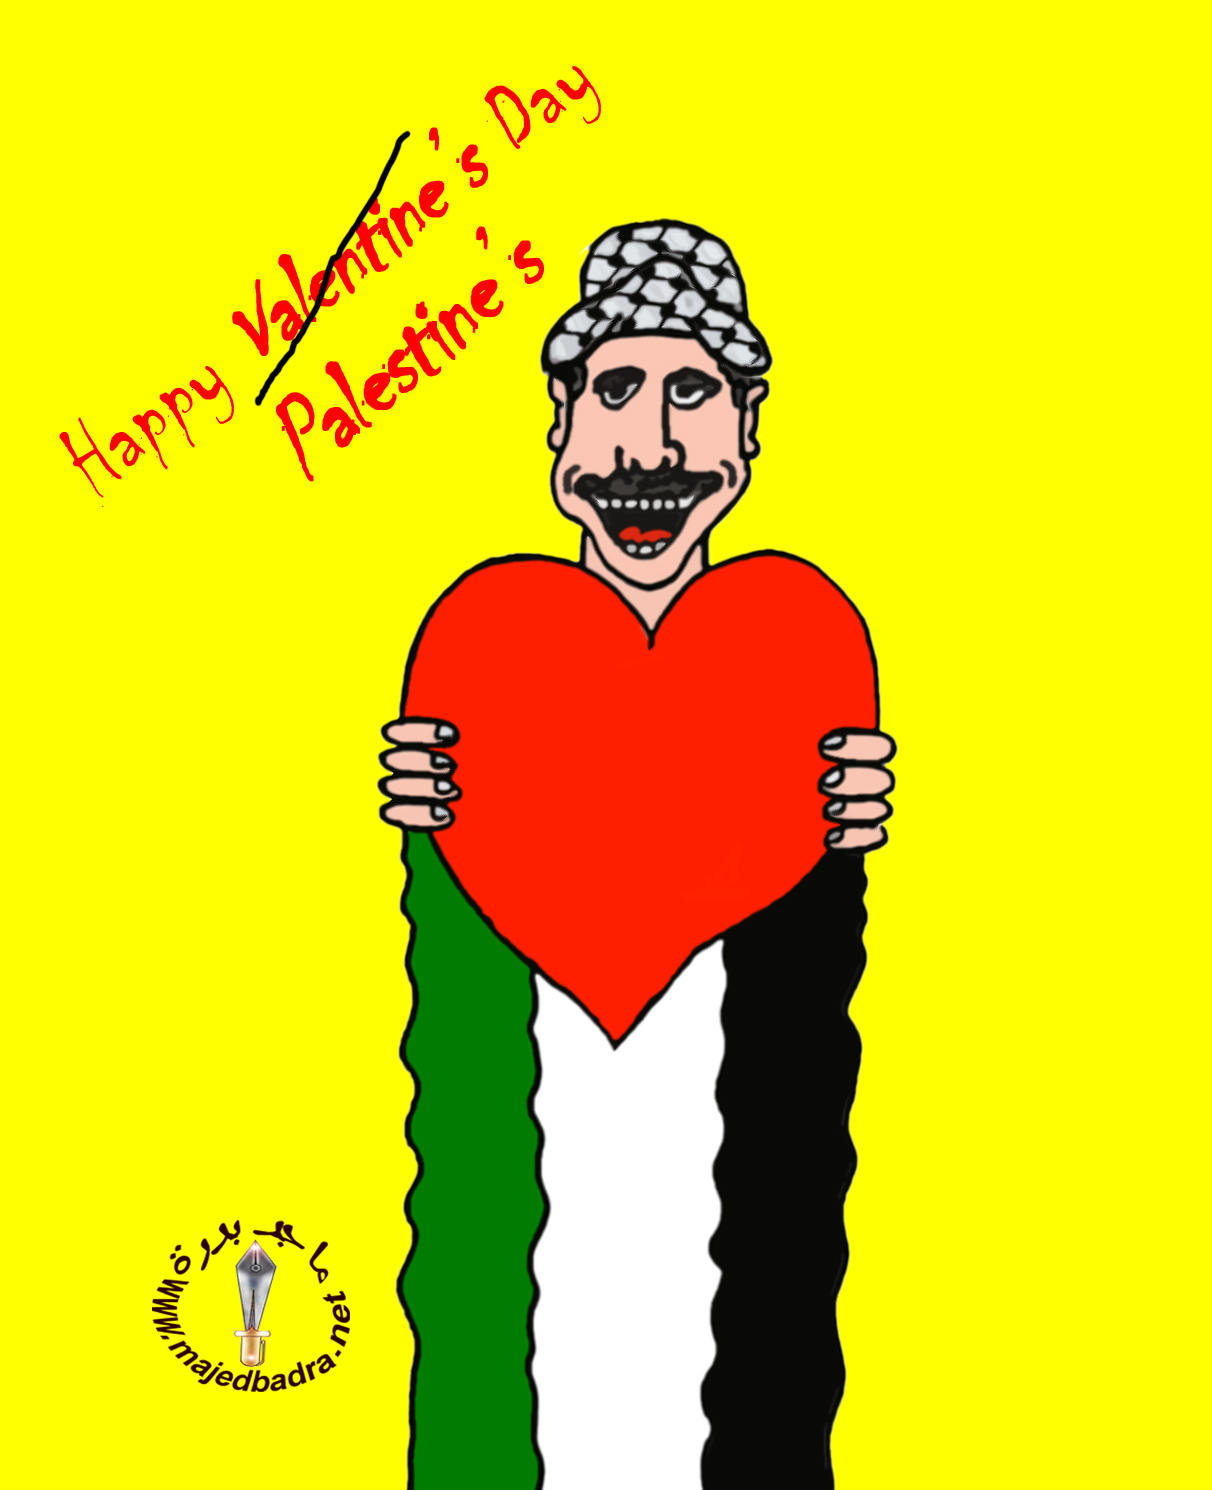 Happy Palestine’s Day